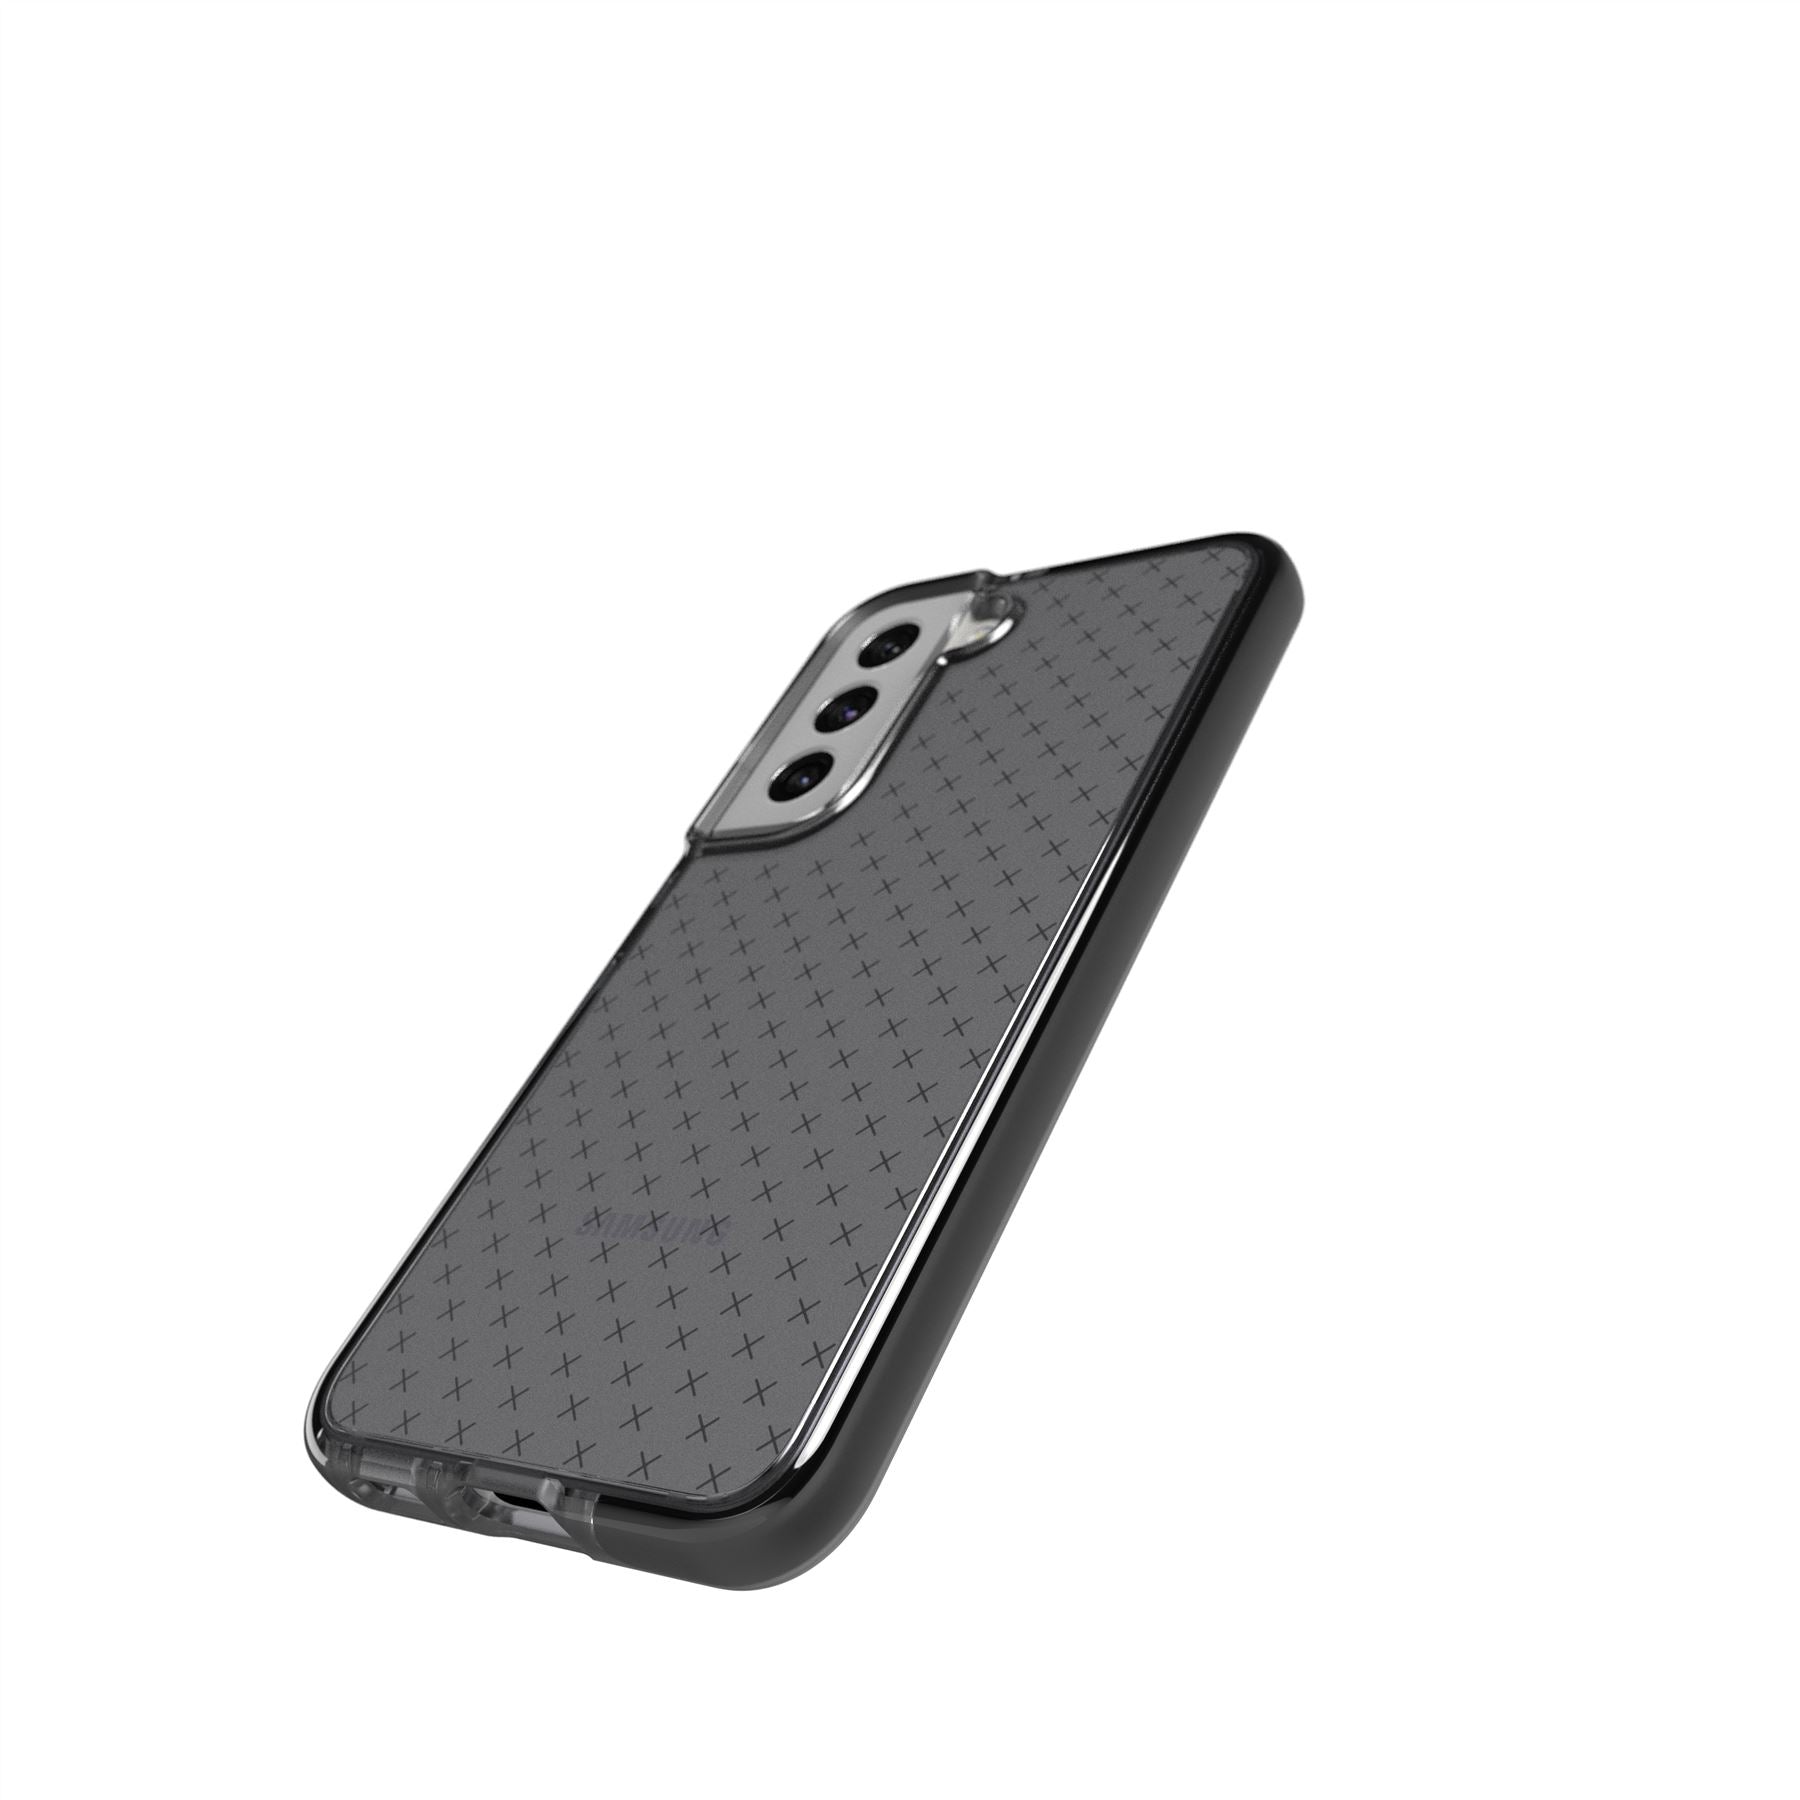 Evo Check Enhanced - Samsung Galaxy S22 Case - Smokey Black